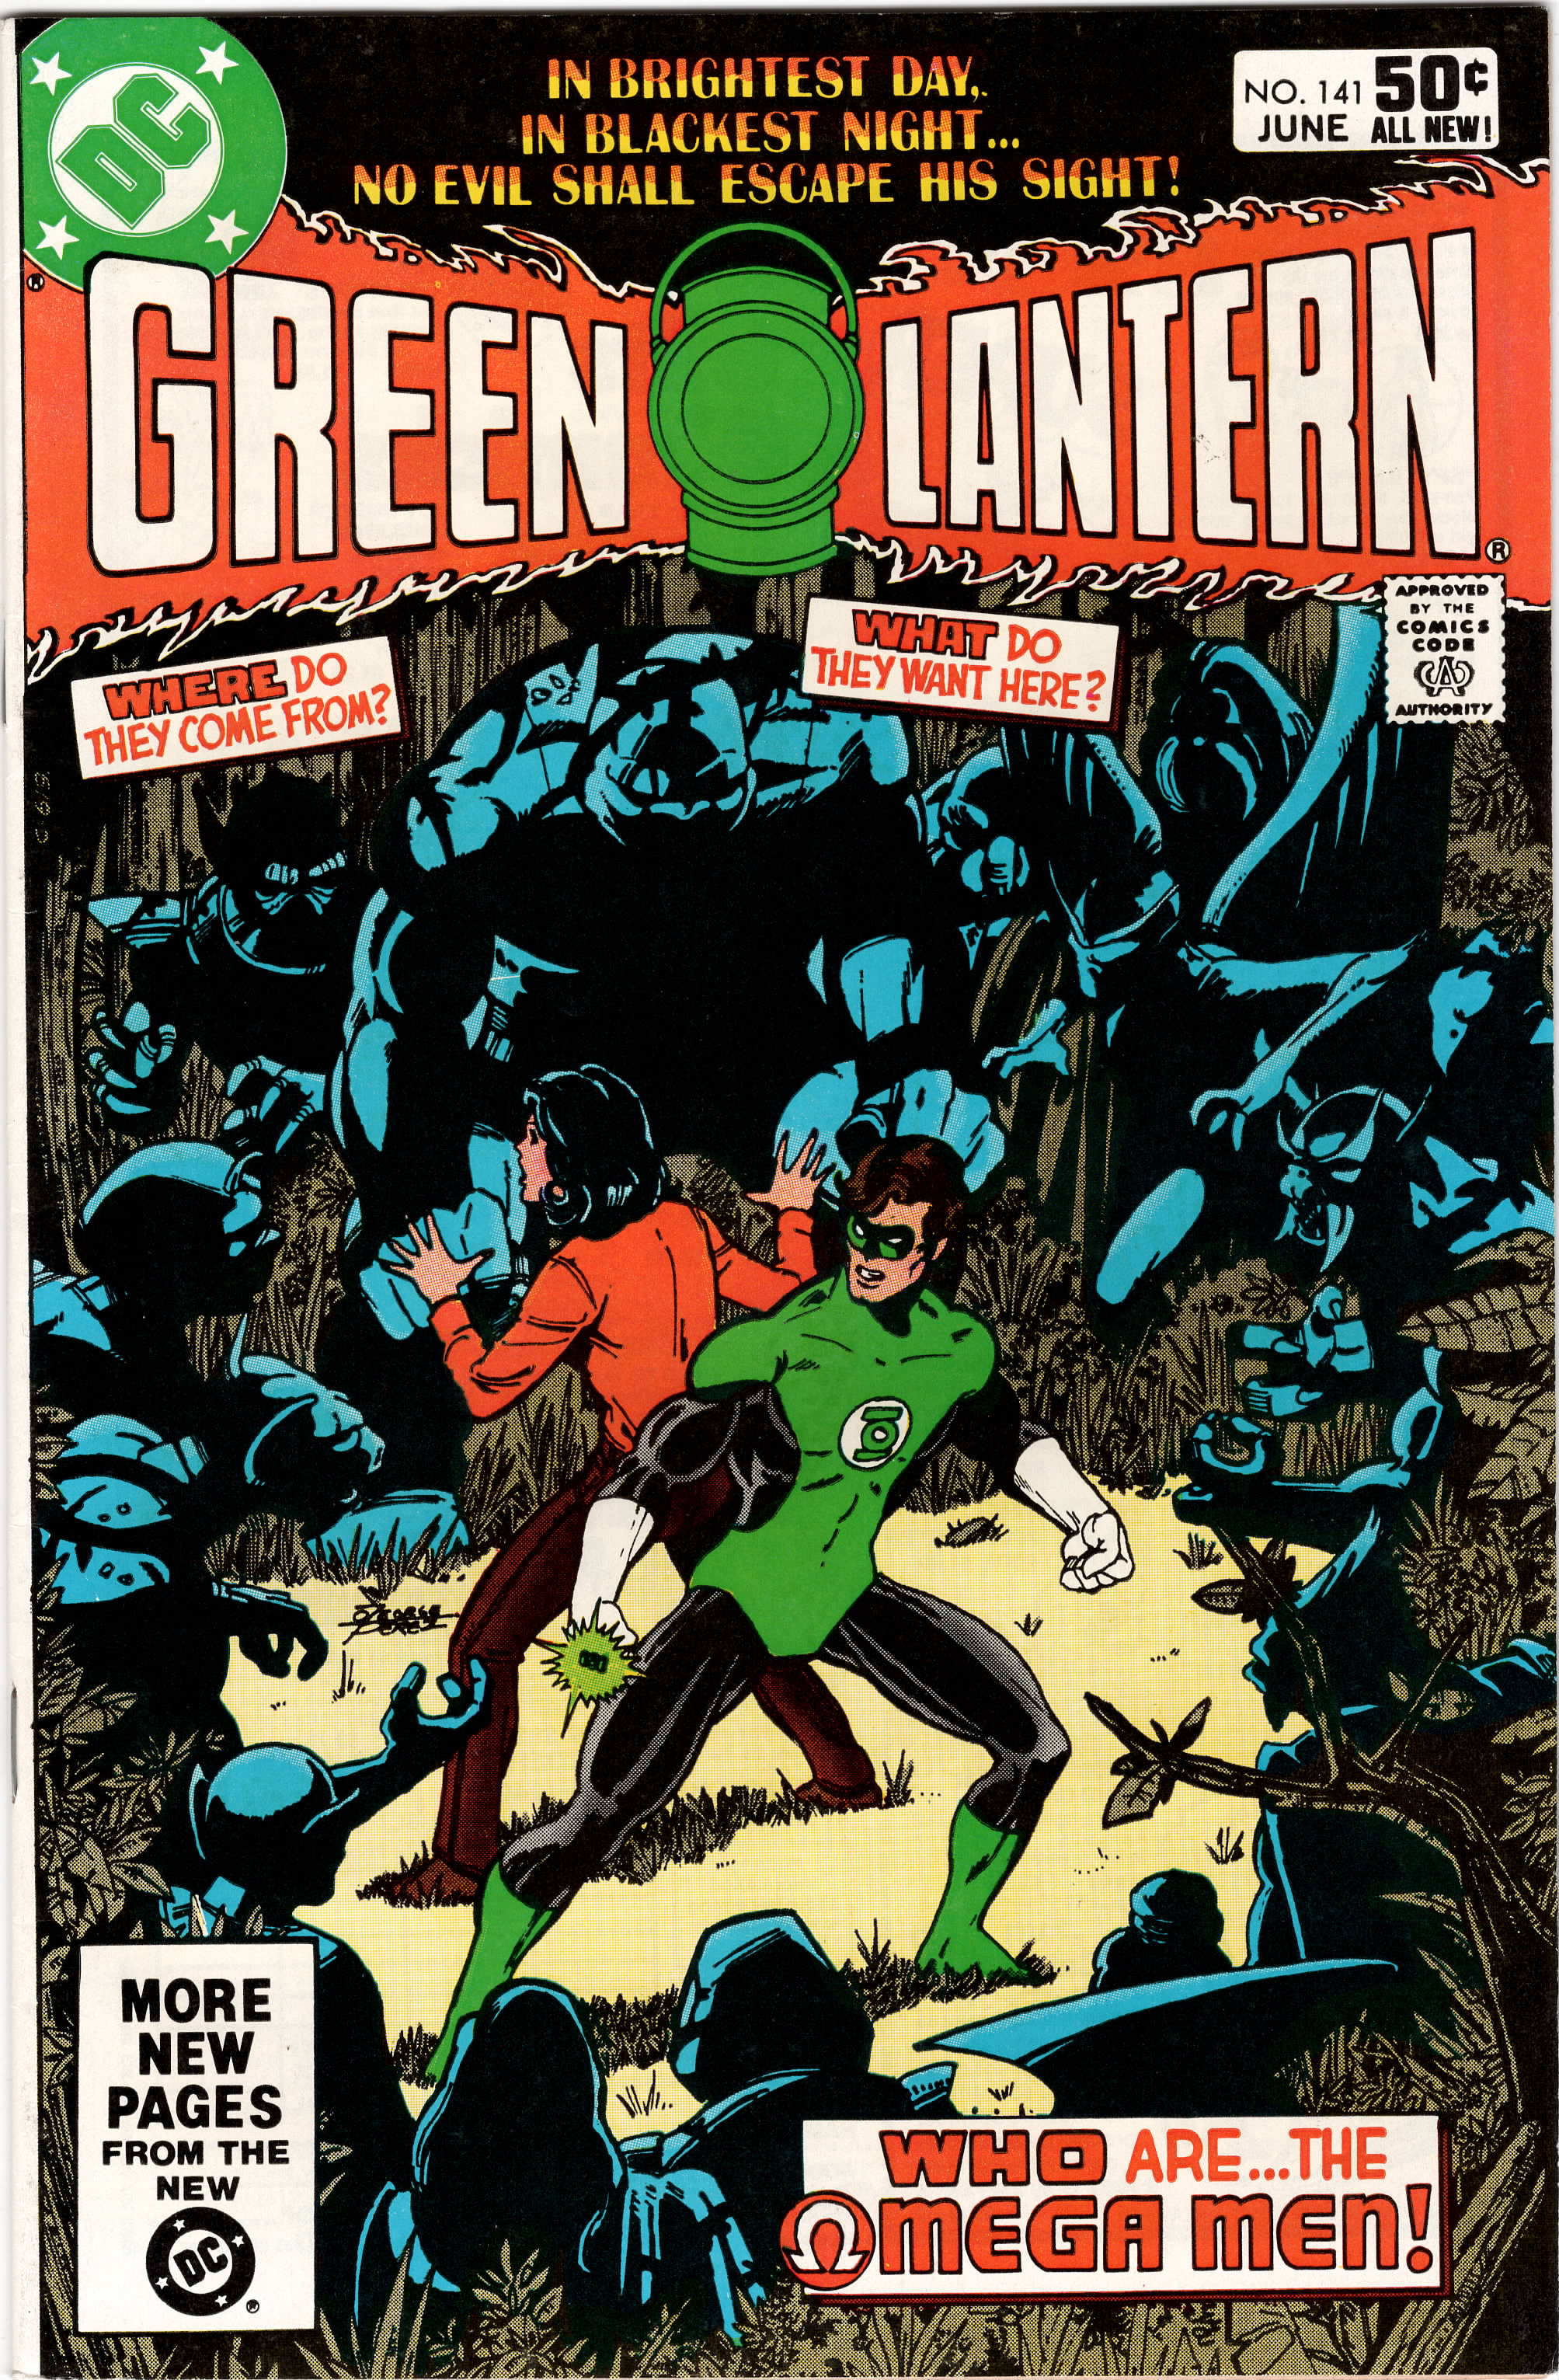 Green Lantern #141